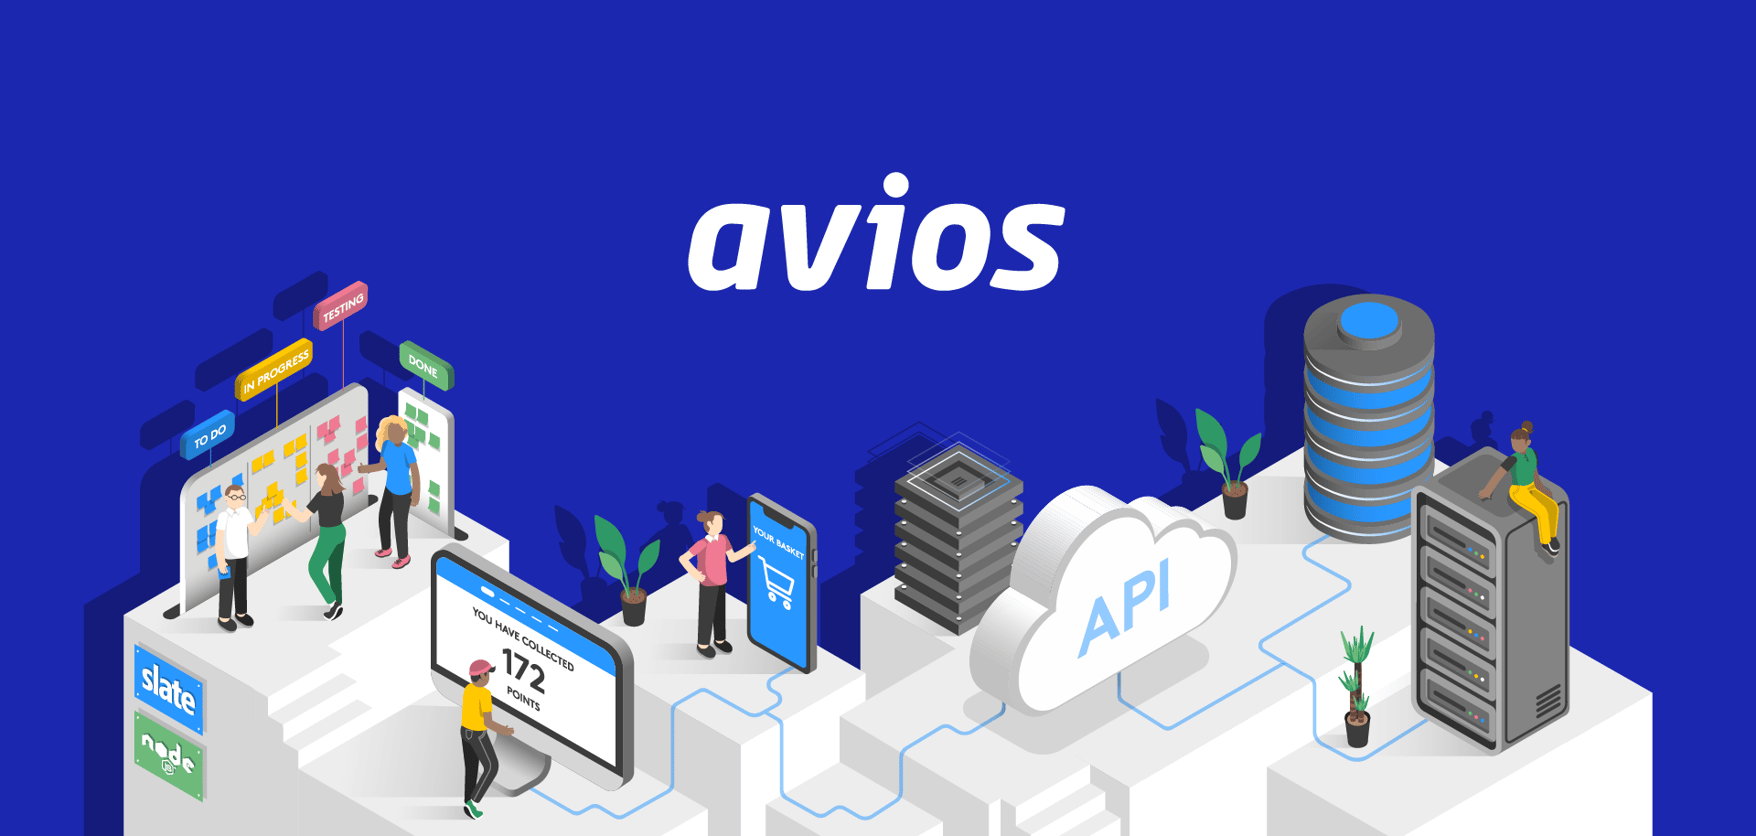 New website_Avios hero_large